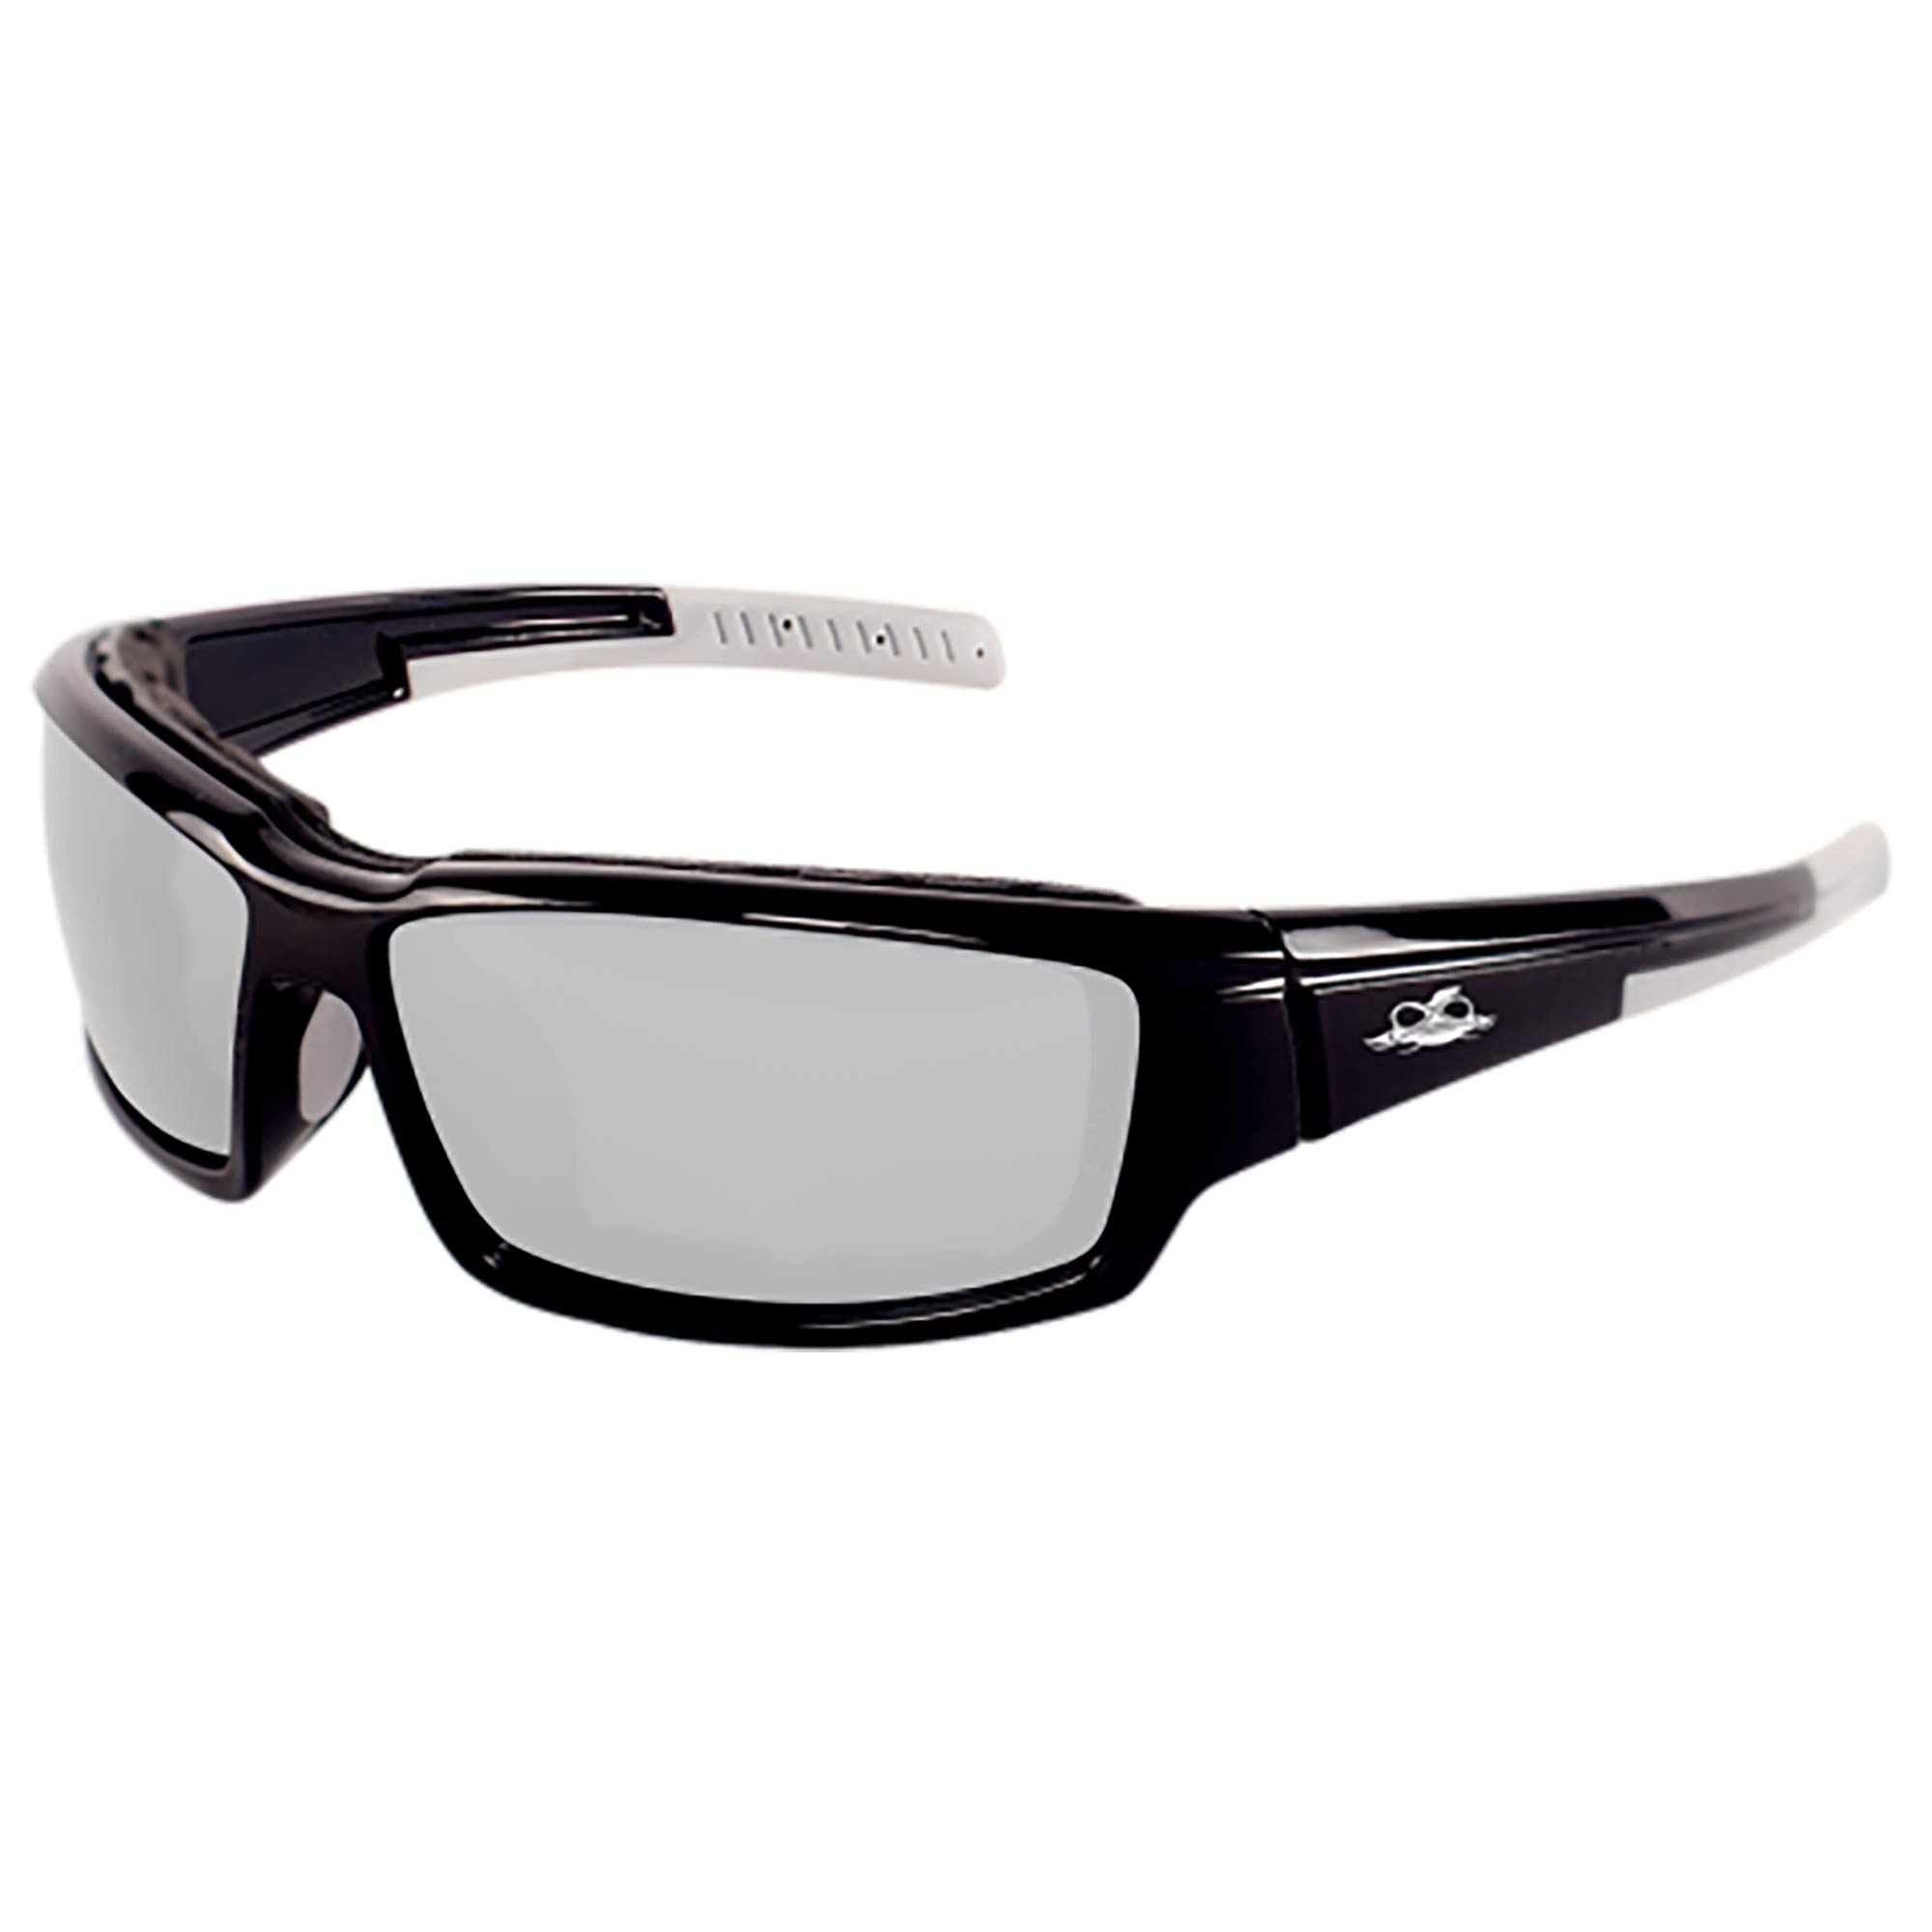 Bullhead Maki Safety Glasses Black Frame Polarized Silver Mirror Lens